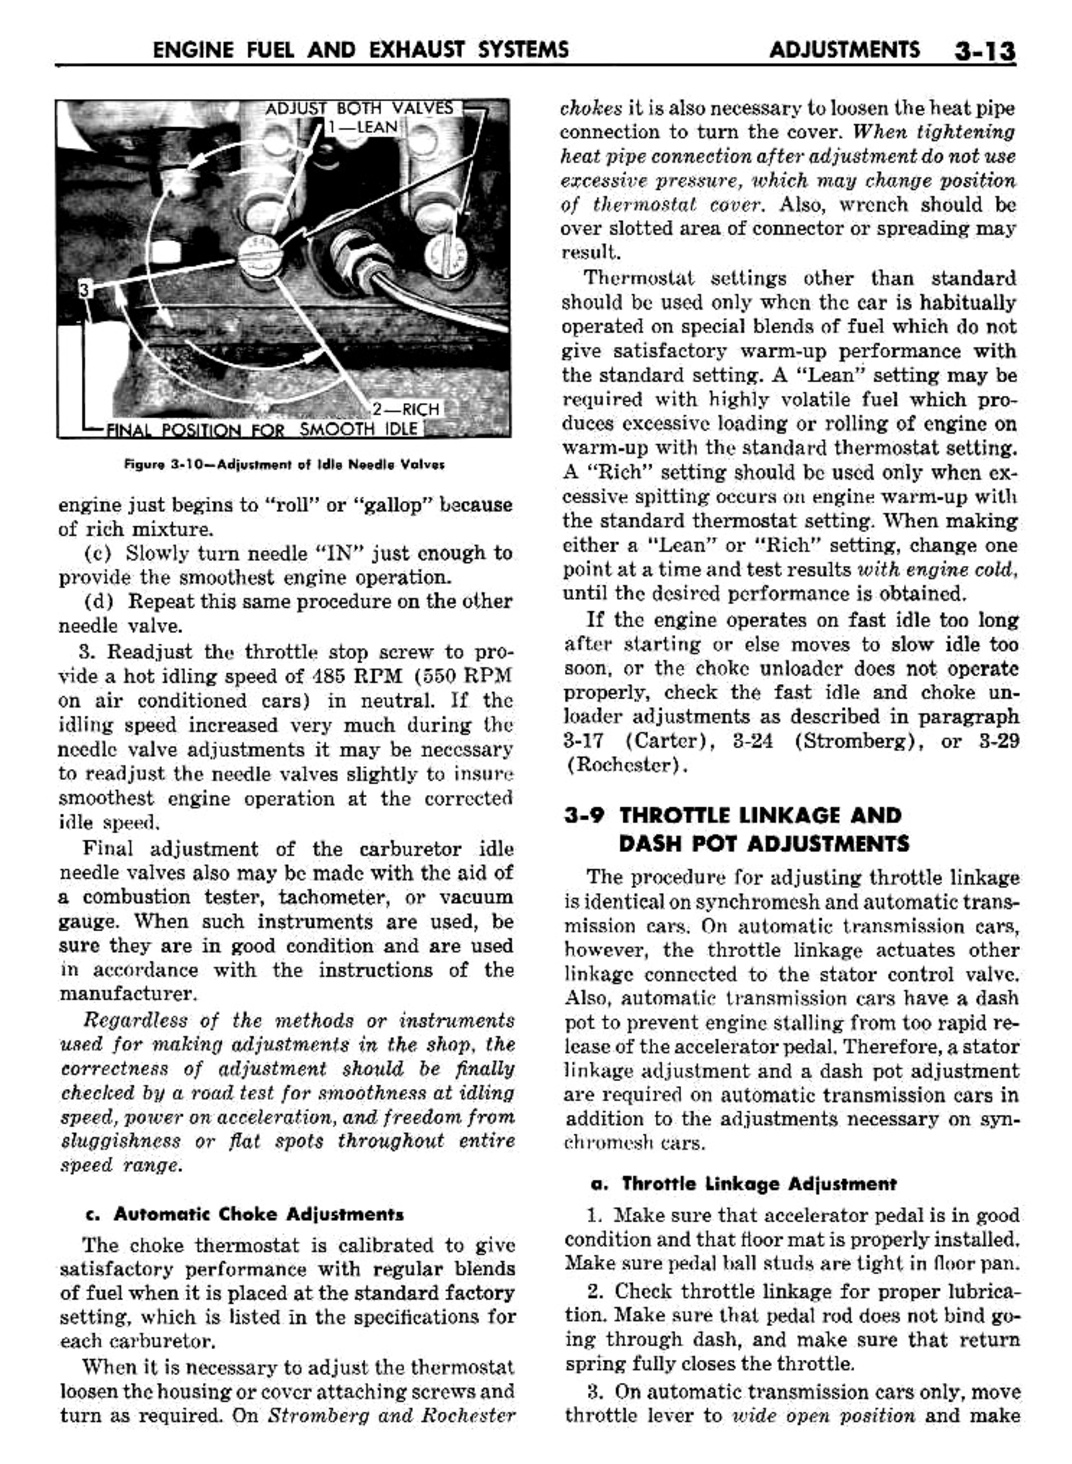 n_04 1960 Buick Shop Manual - Engine Fuel & Exhaust-013-013.jpg